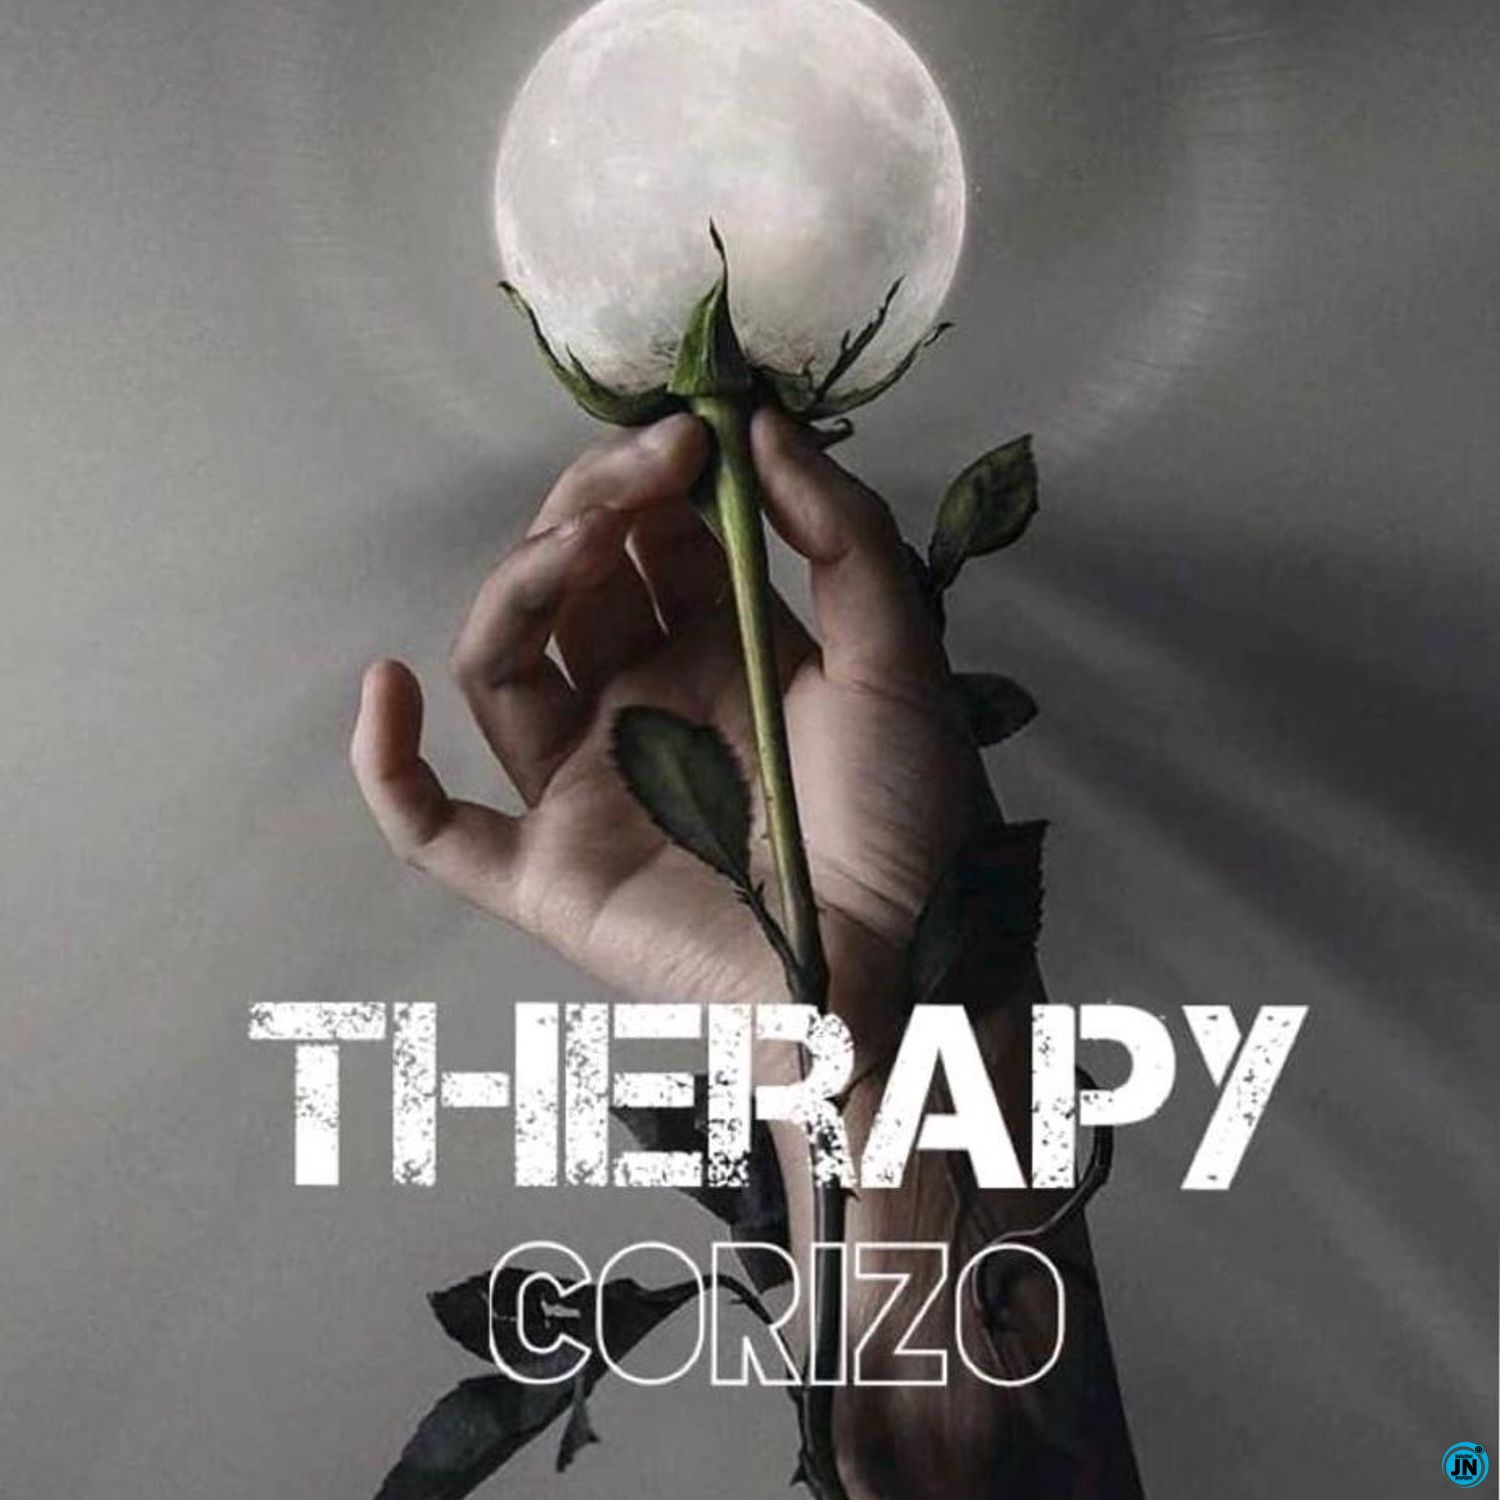 Corizo - Therapy   Mp3 Download lyrics